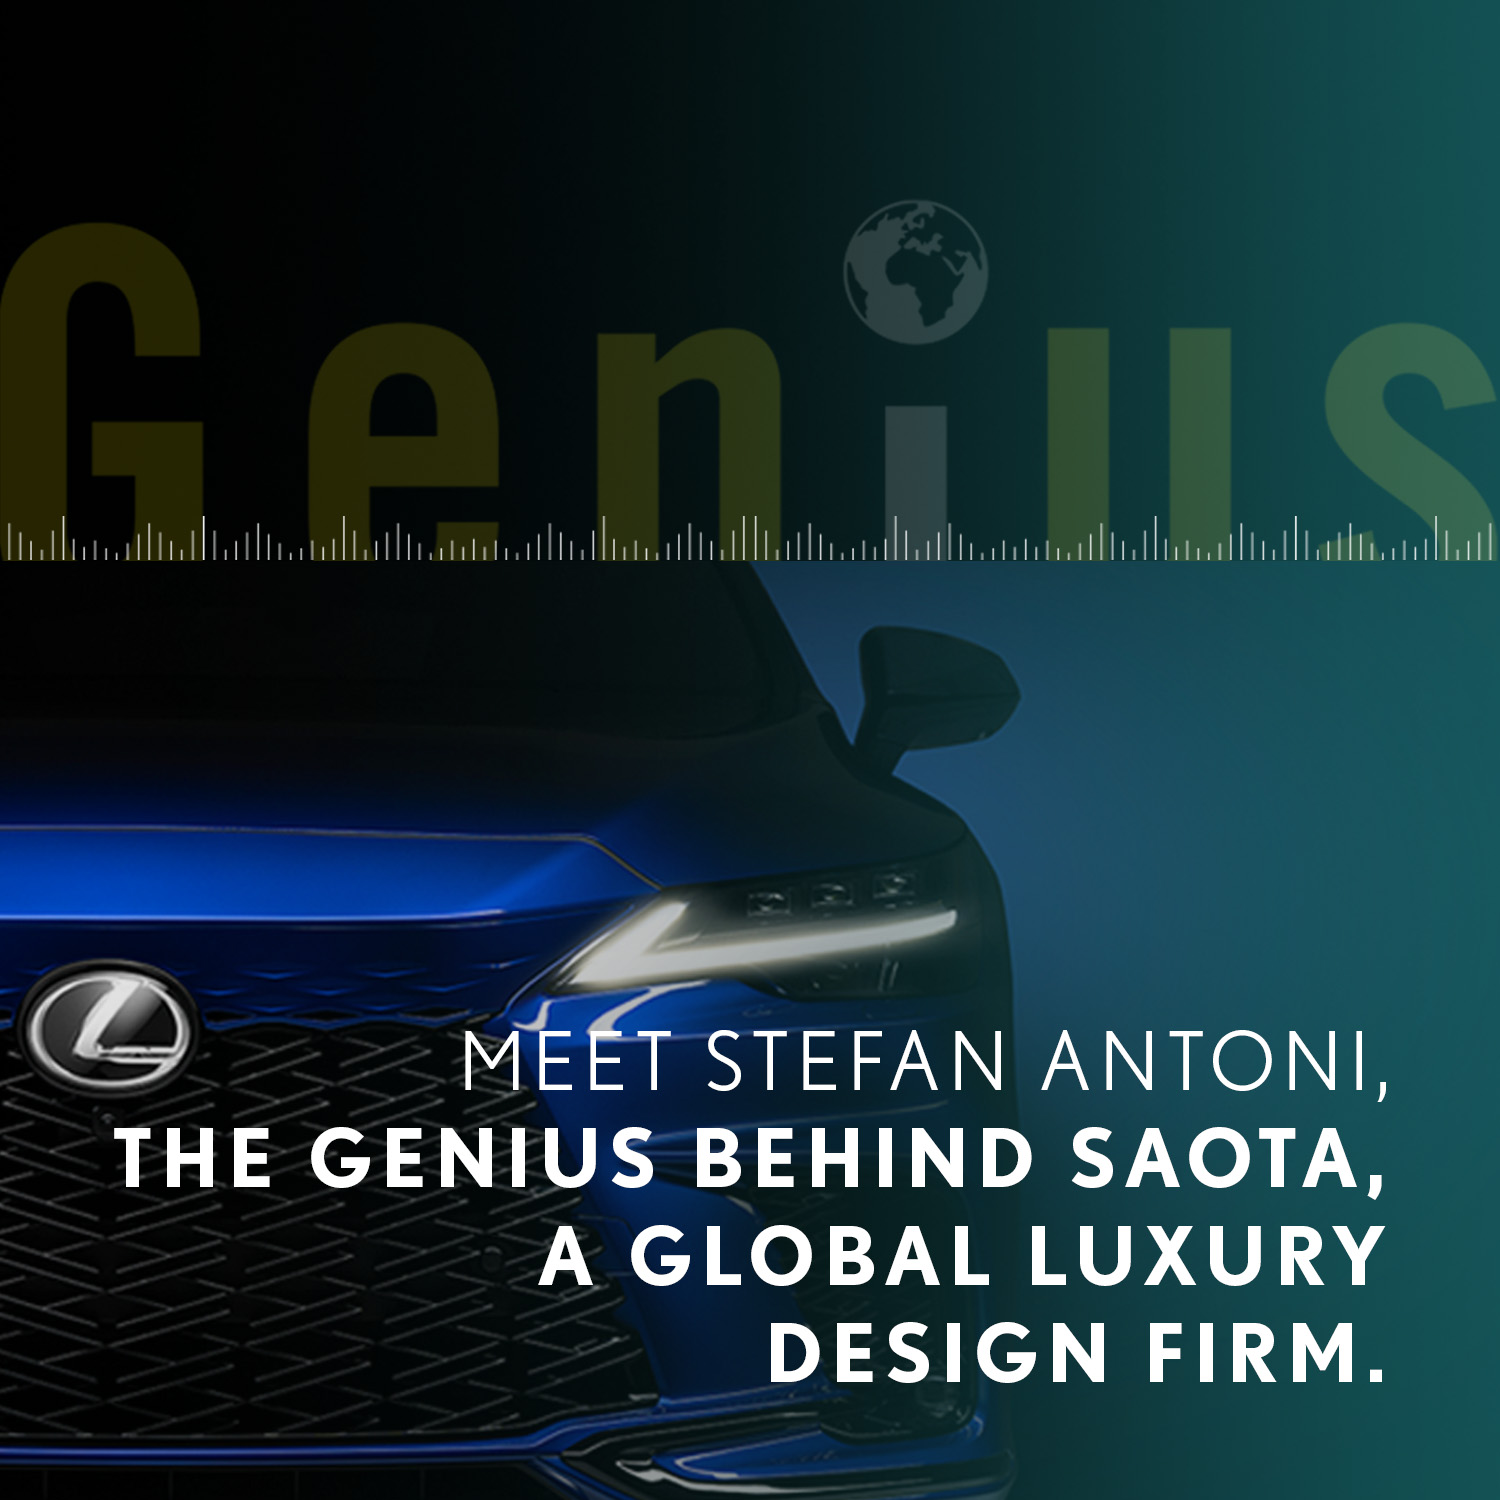 The Genius that grew SAOTA into a global luxury design brand